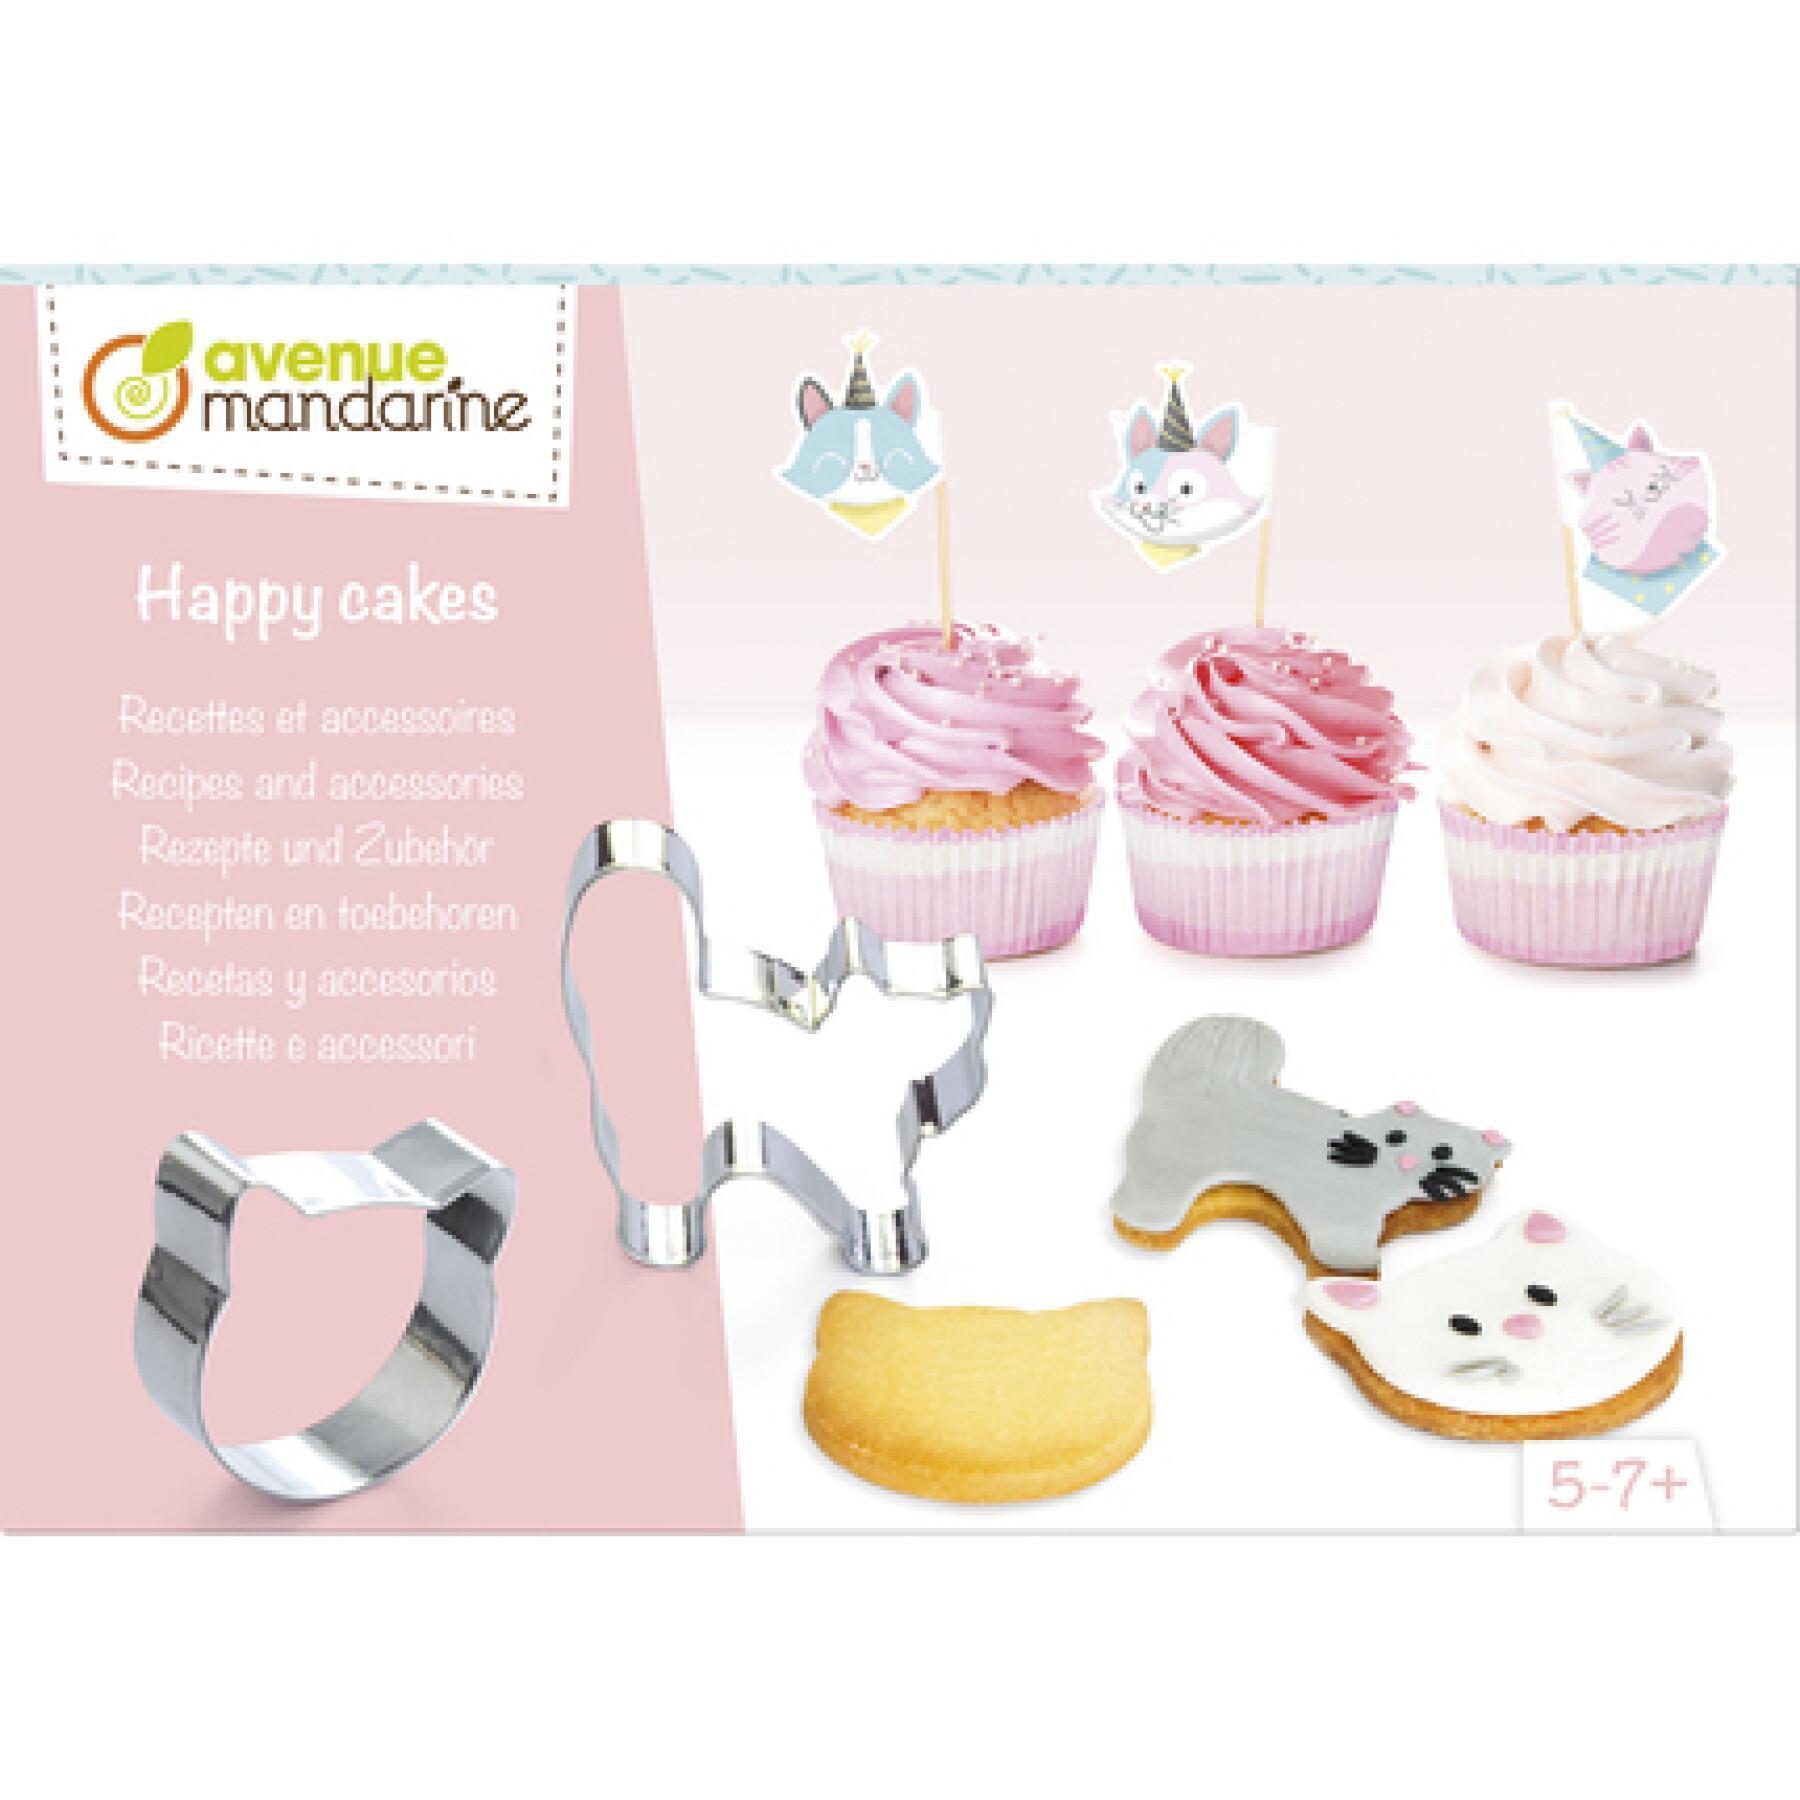 Creative recipe box and accessory happy cakes cat Avenue Mandarine